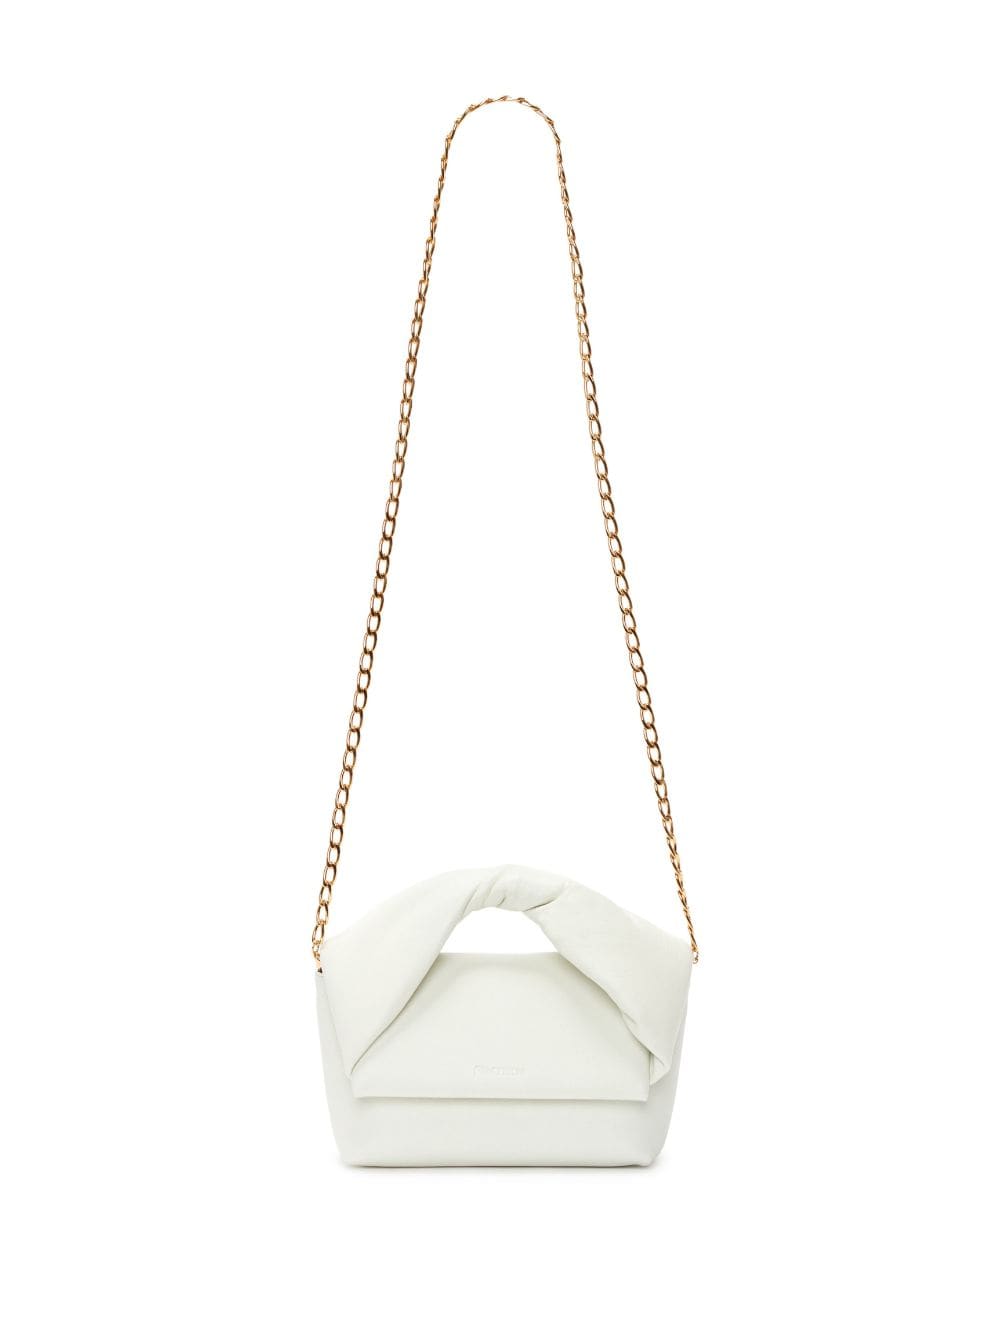 JW ANDERSON Offwhite Chain Loop Handbag for Women